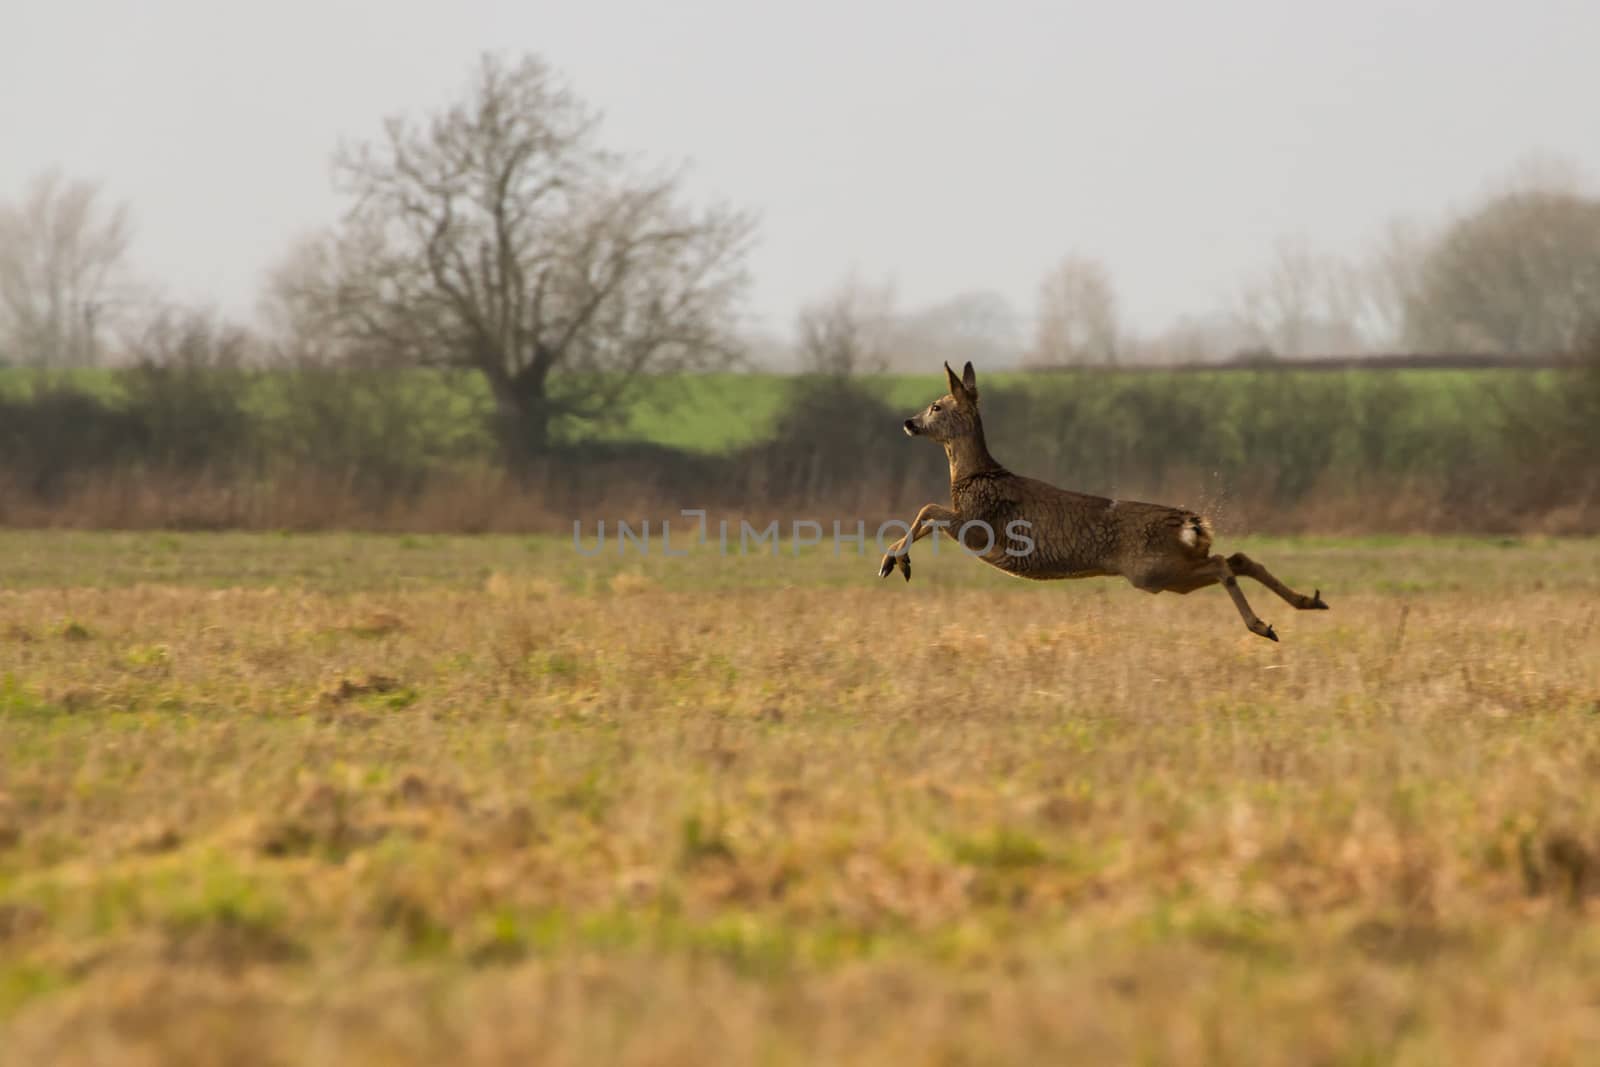 Female Roe Deer running across Field in British Countryside